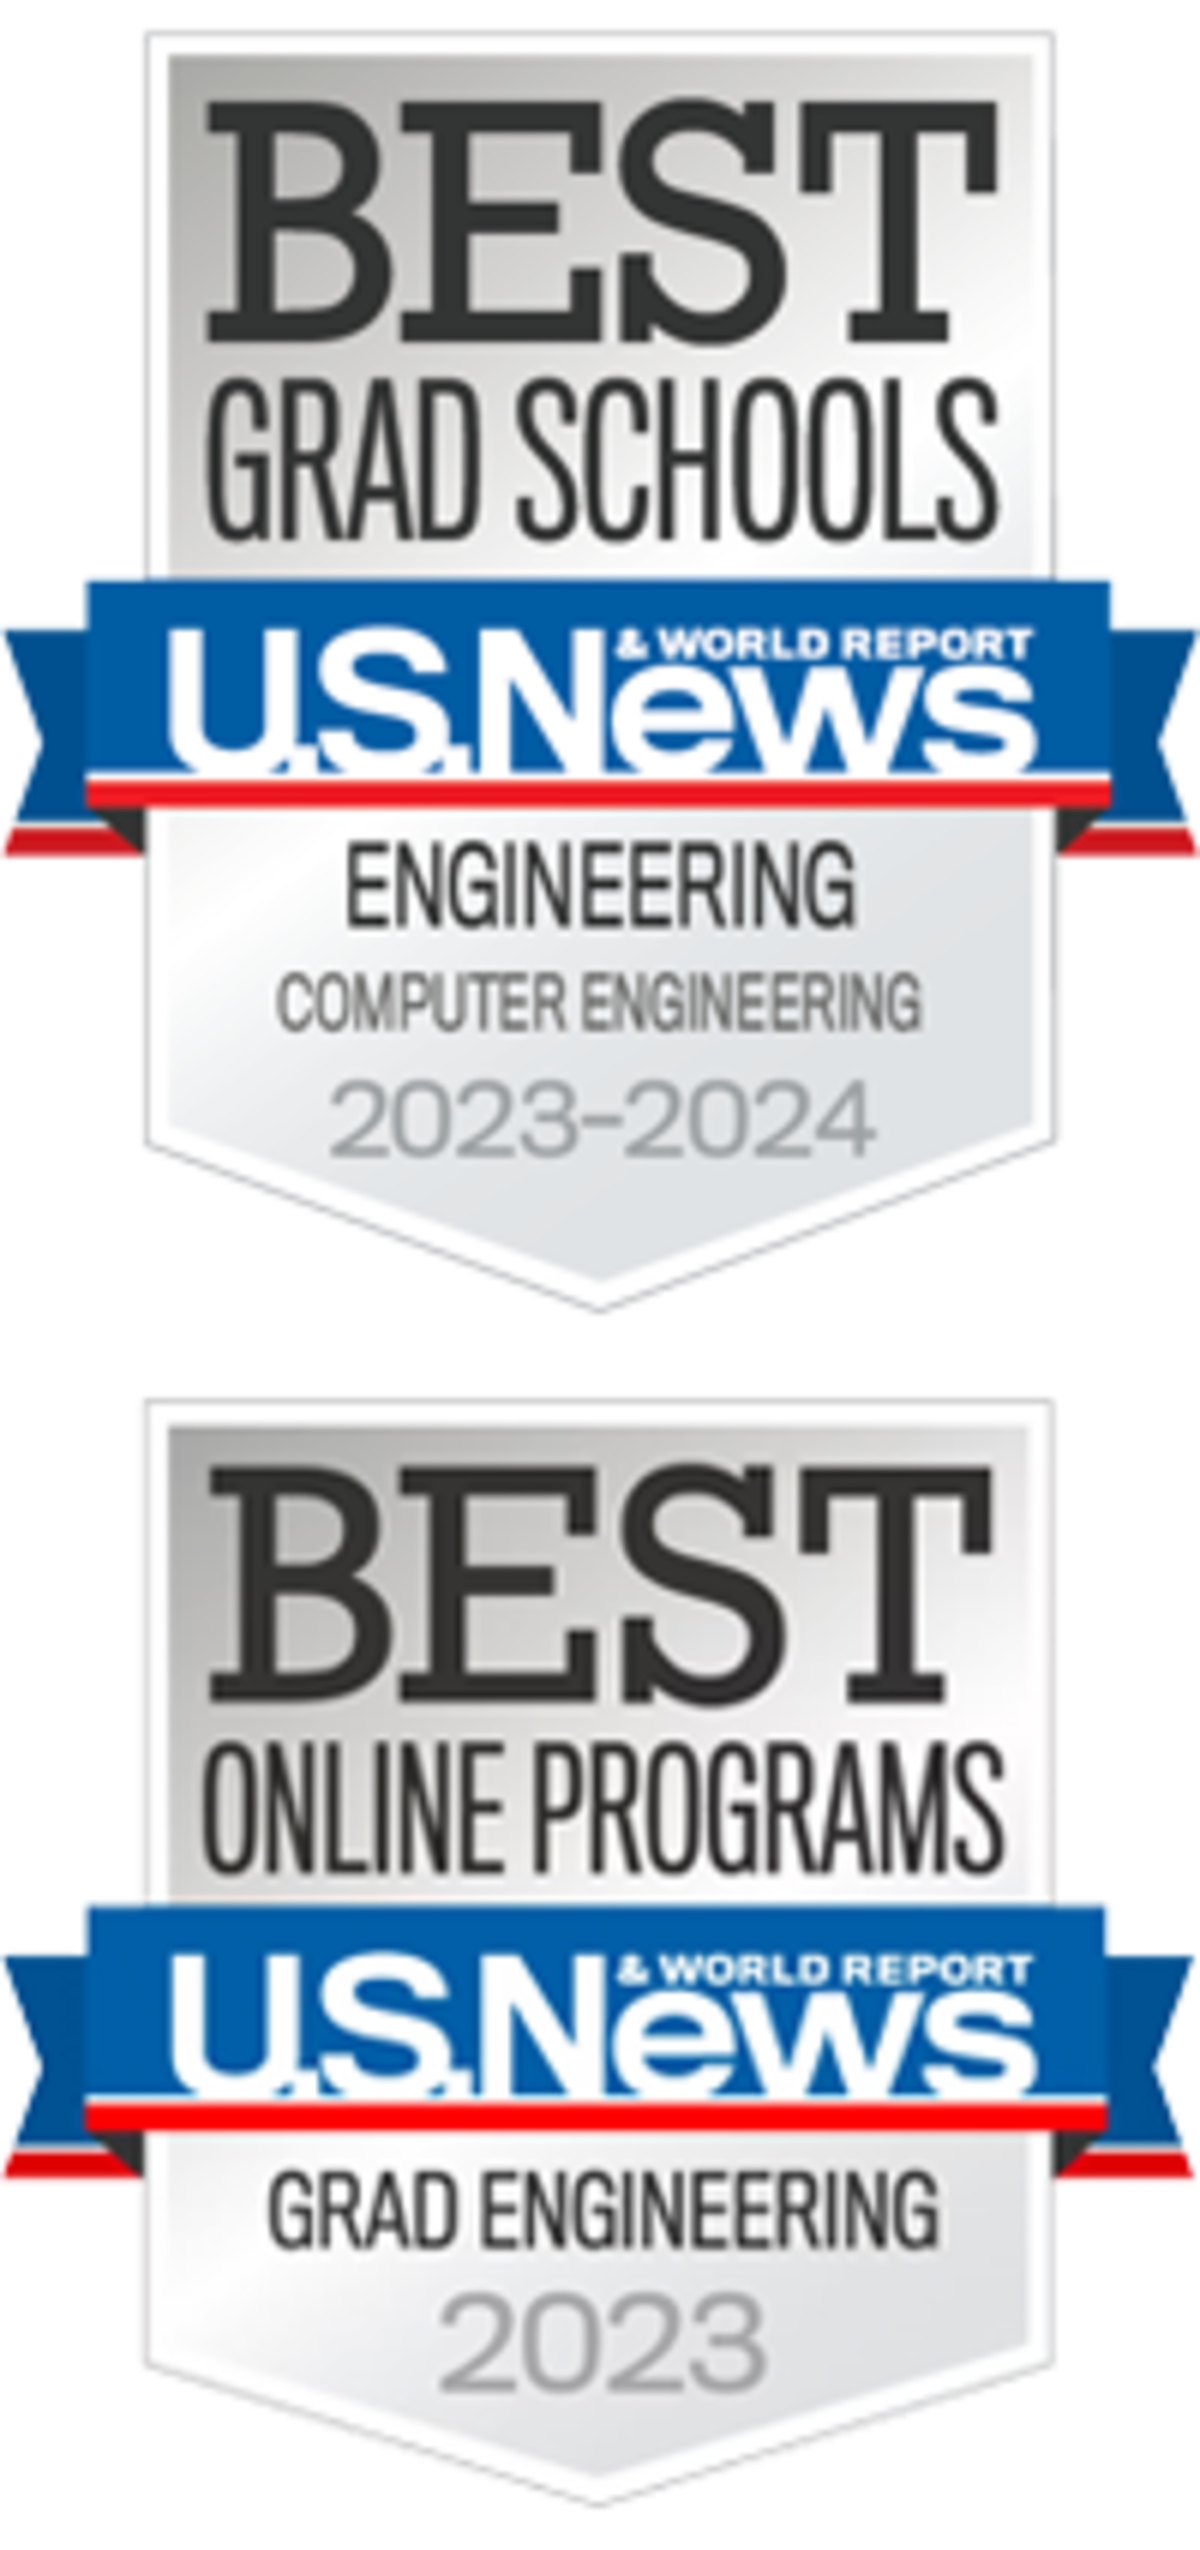 9 Best Online Computer Science Degree Programs in 2023